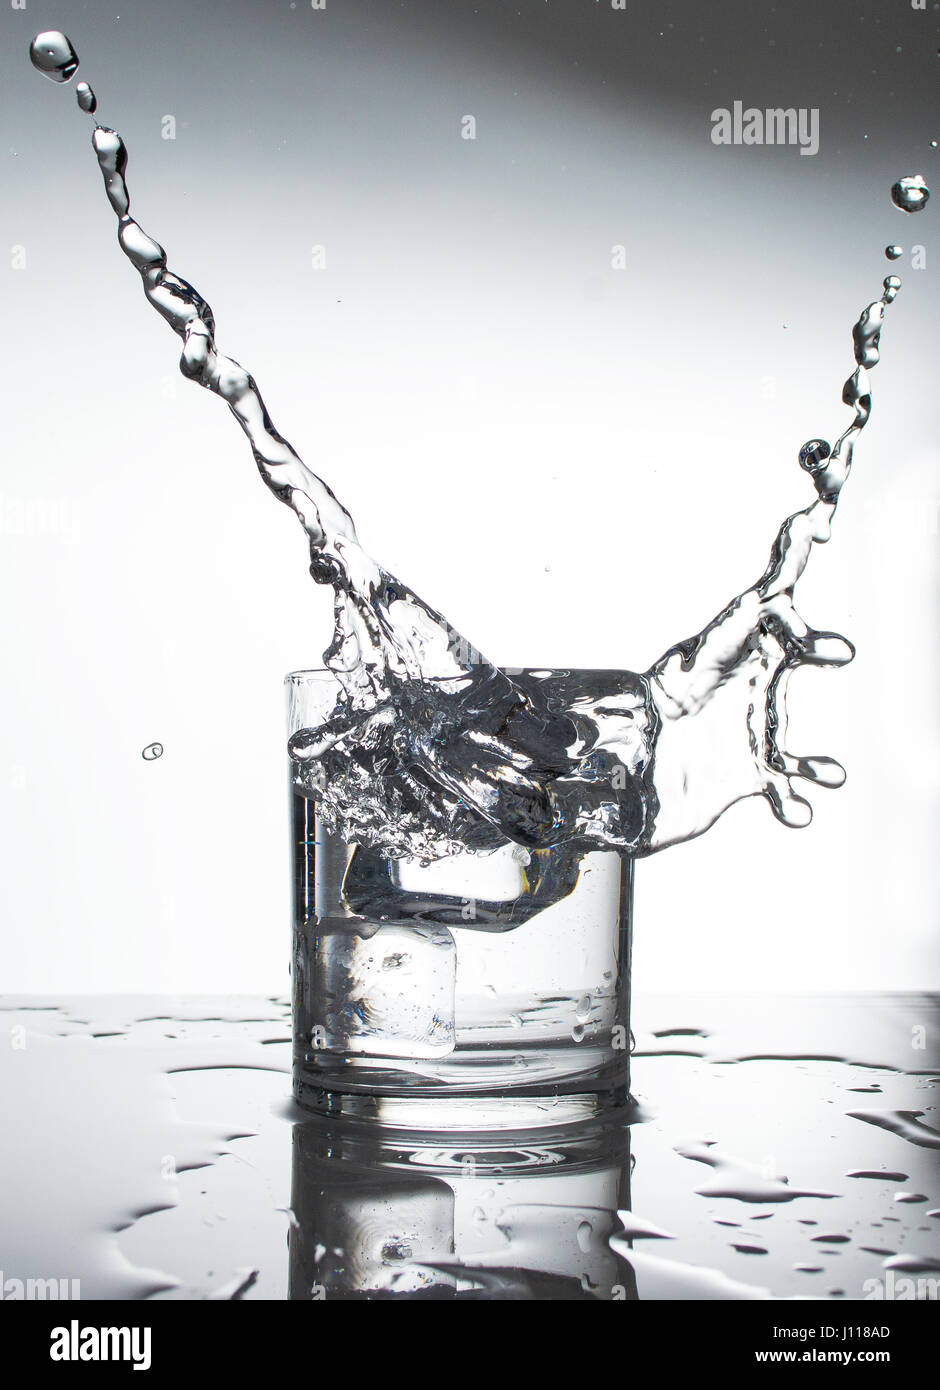 Fluid splashing in a whisky glass. Stock Photo